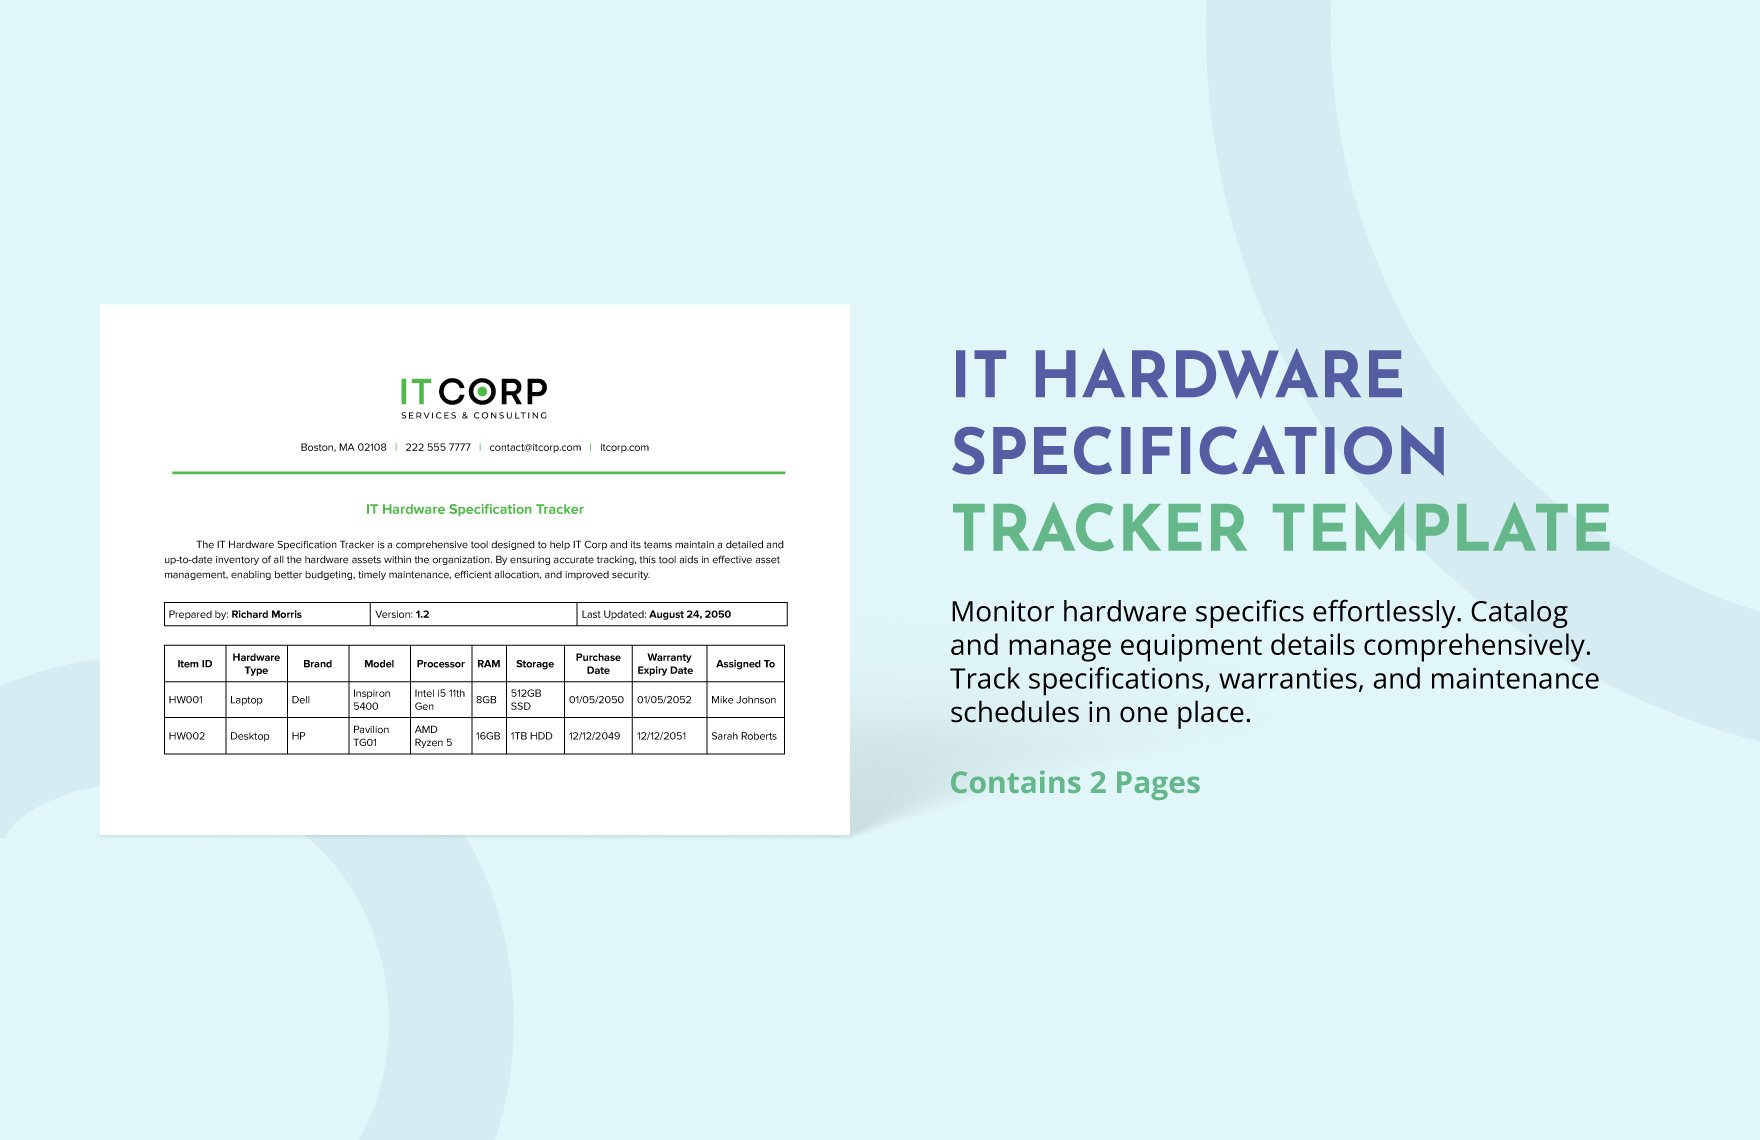 IT Hardware Specification Tracker Template